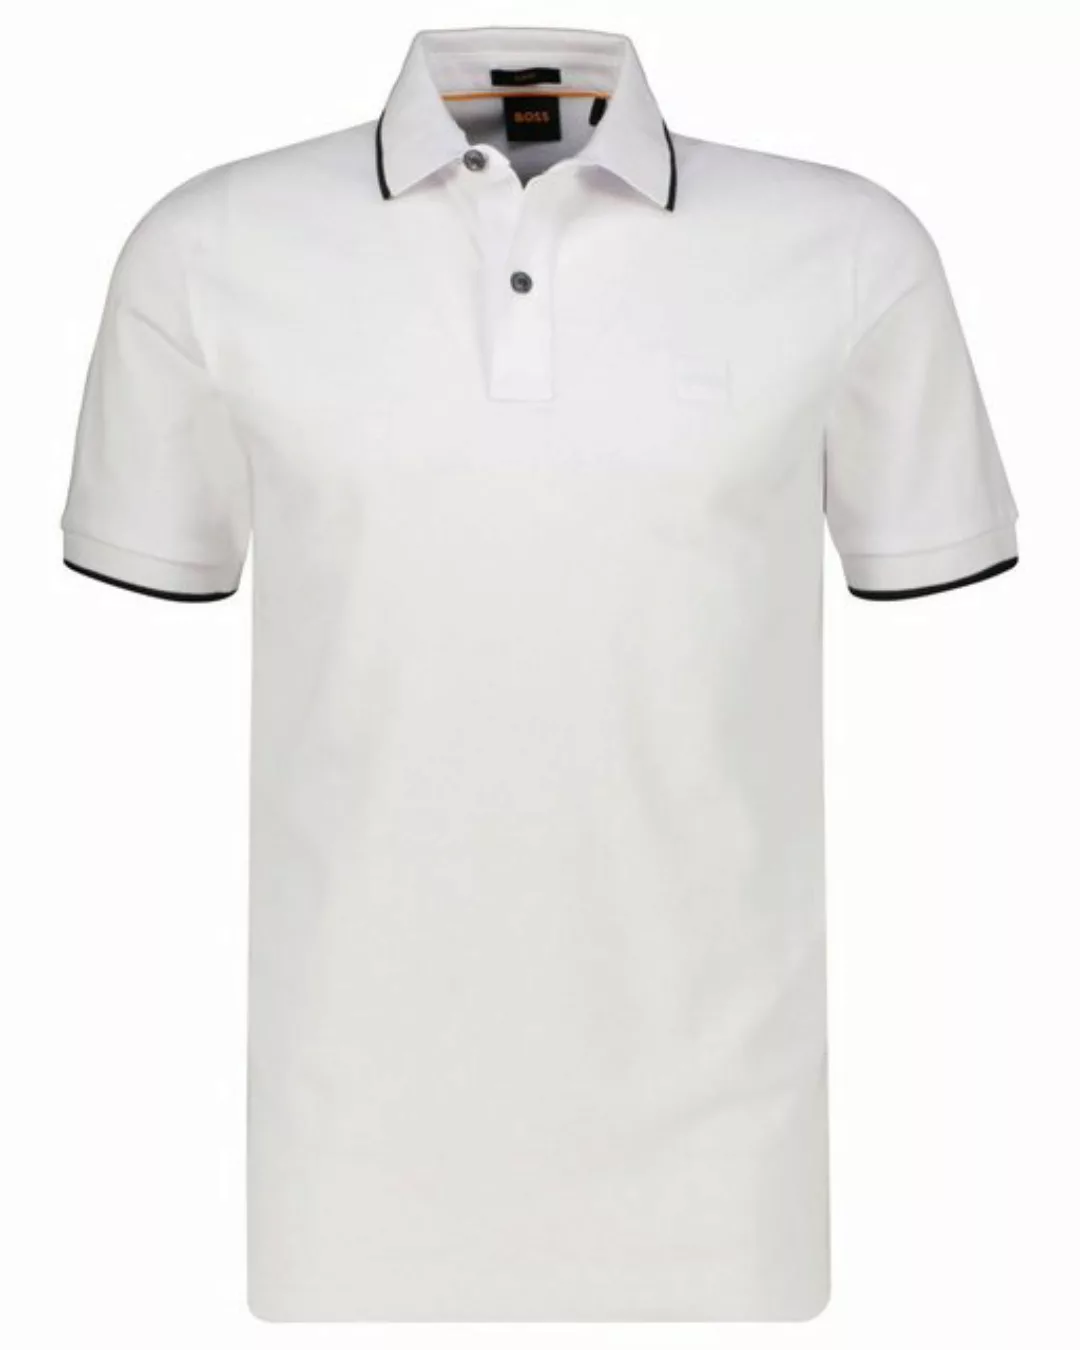 BOSS ORANGE Poloshirt Passertip Casual Look, BOSS Logo-Badge günstig online kaufen